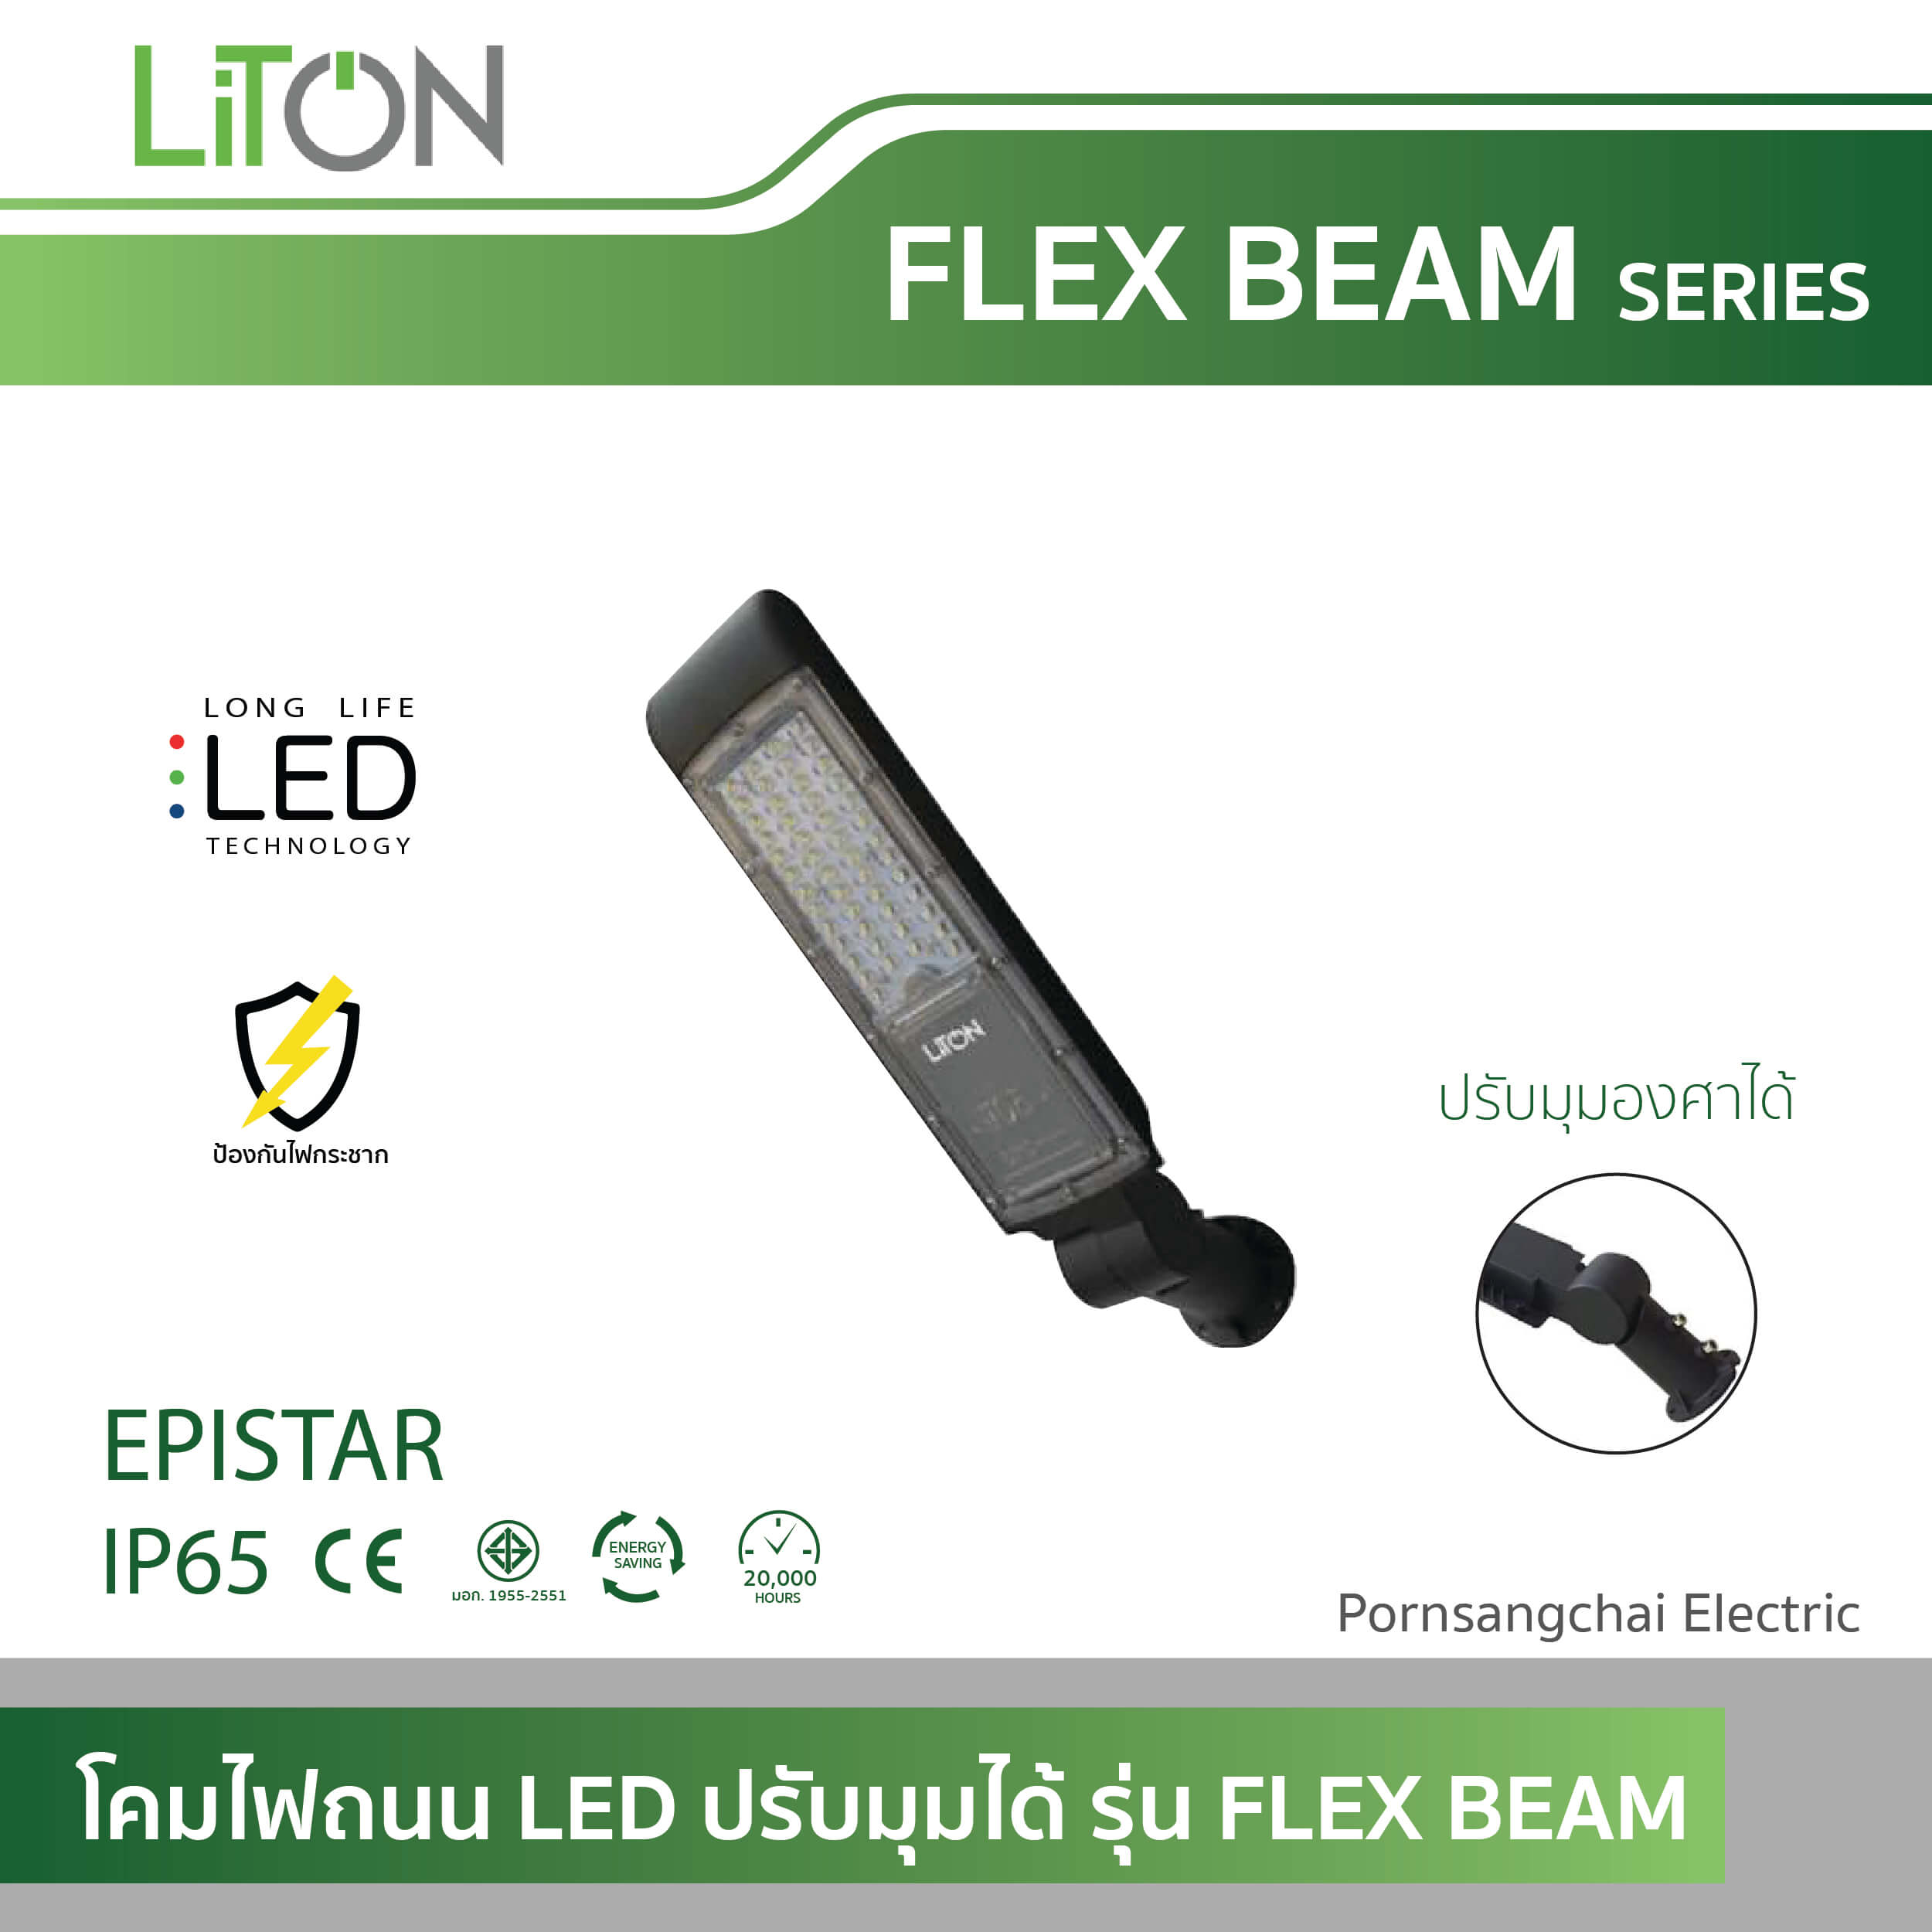 LITON โคมไฟถนน LED ปรับมุมได้ รุ่น FLEX BEAM